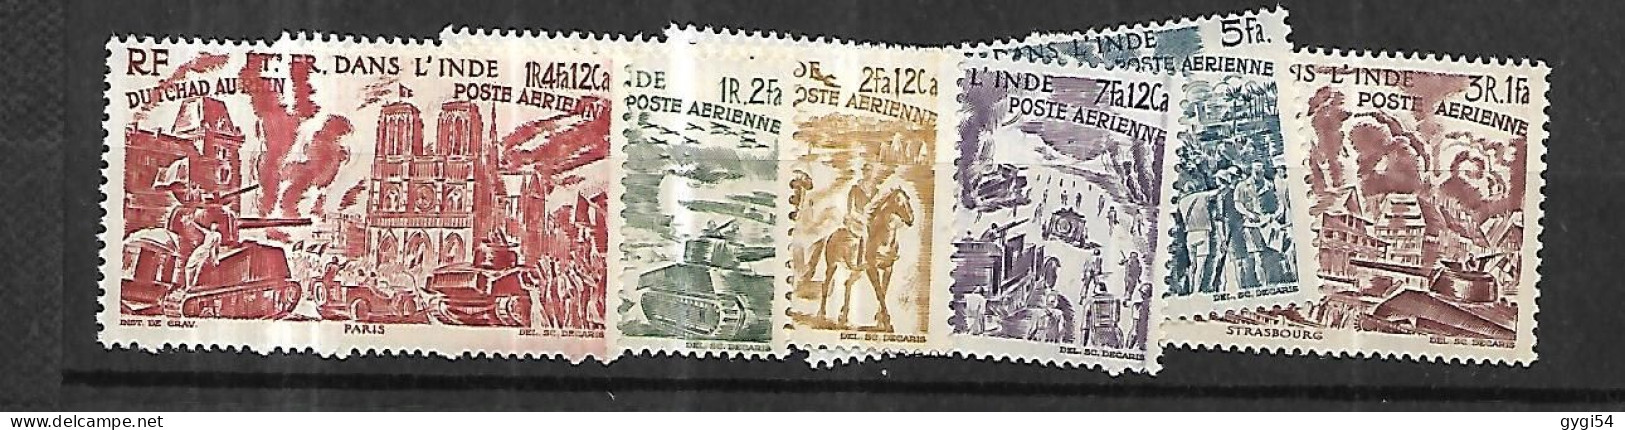 GRANDE SERIE COLONIALE DU TCHAD AU RHIN 1946 INDE Cat Yt   11  à  16    N** MNH - 1946 Tchad Au Rhin